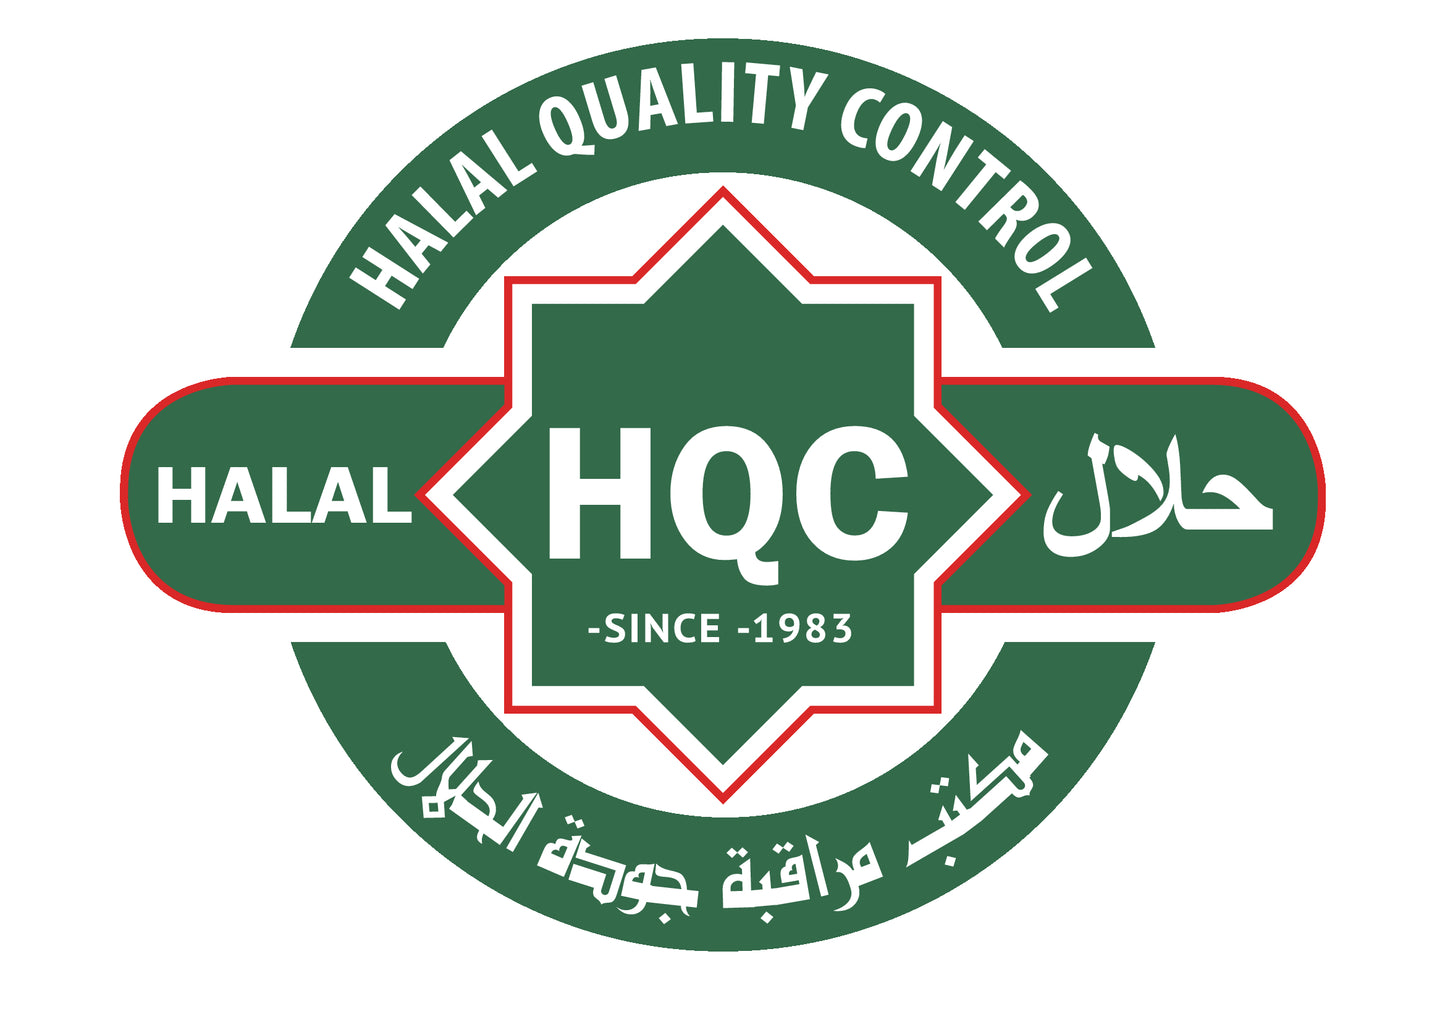 Halal Quality Control logo